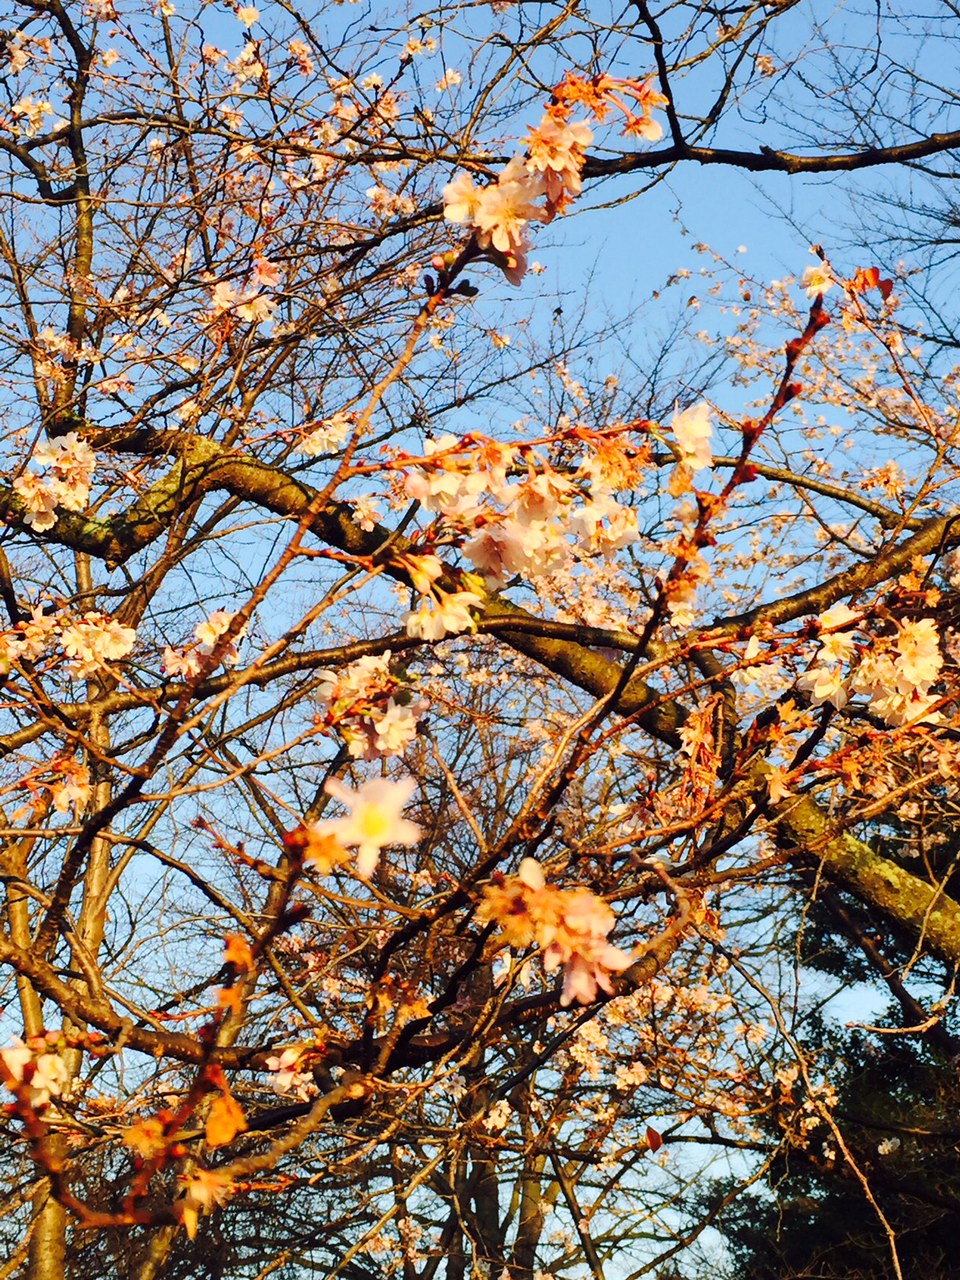 Washington’s cherry trees bloom in ‘heat wave’